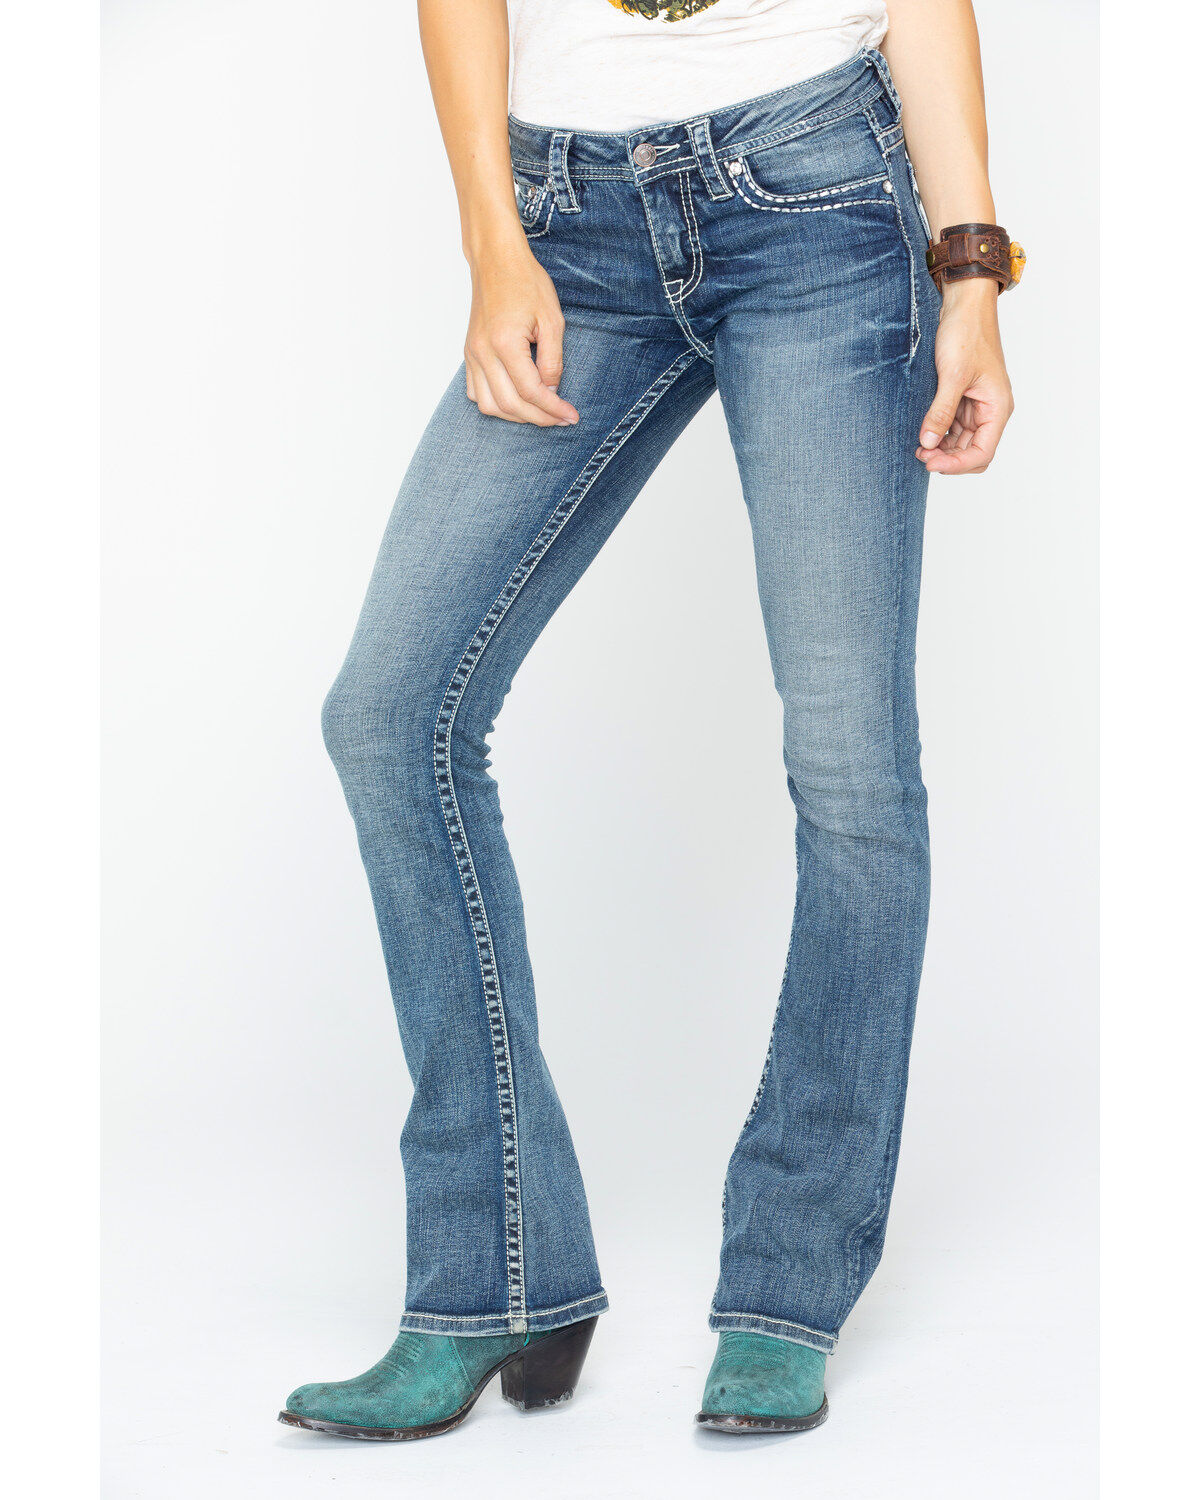 Shyanne Jeans Size Chart